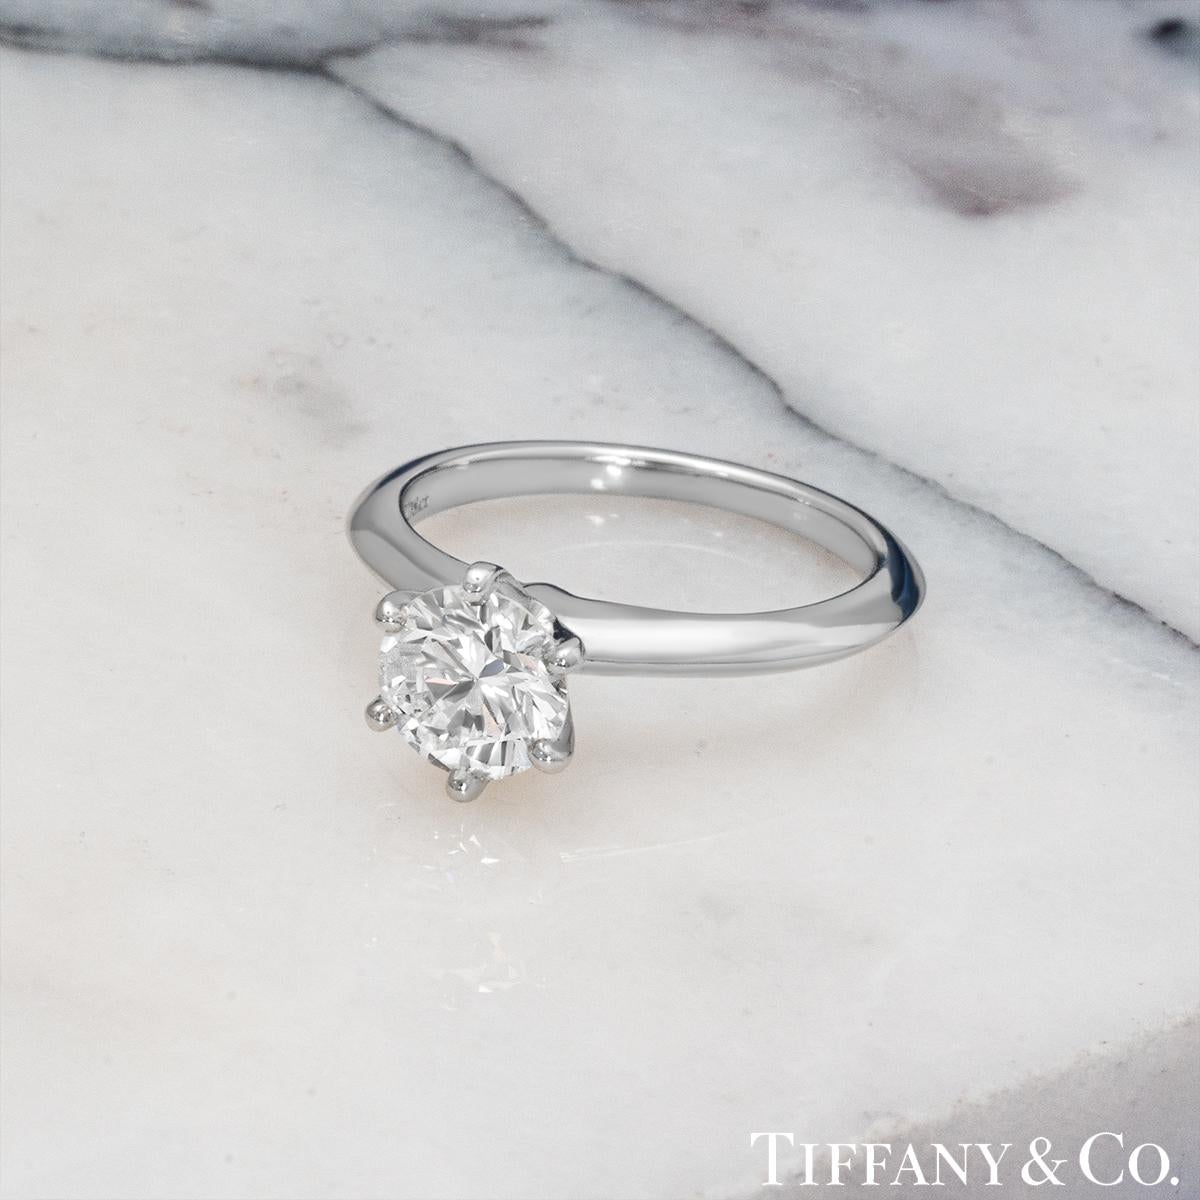 Tiffany & Co. Platin Verlobungsring mit Solitär in Diamantfassung 1,08 Karat I/VS1  im Angebot 3